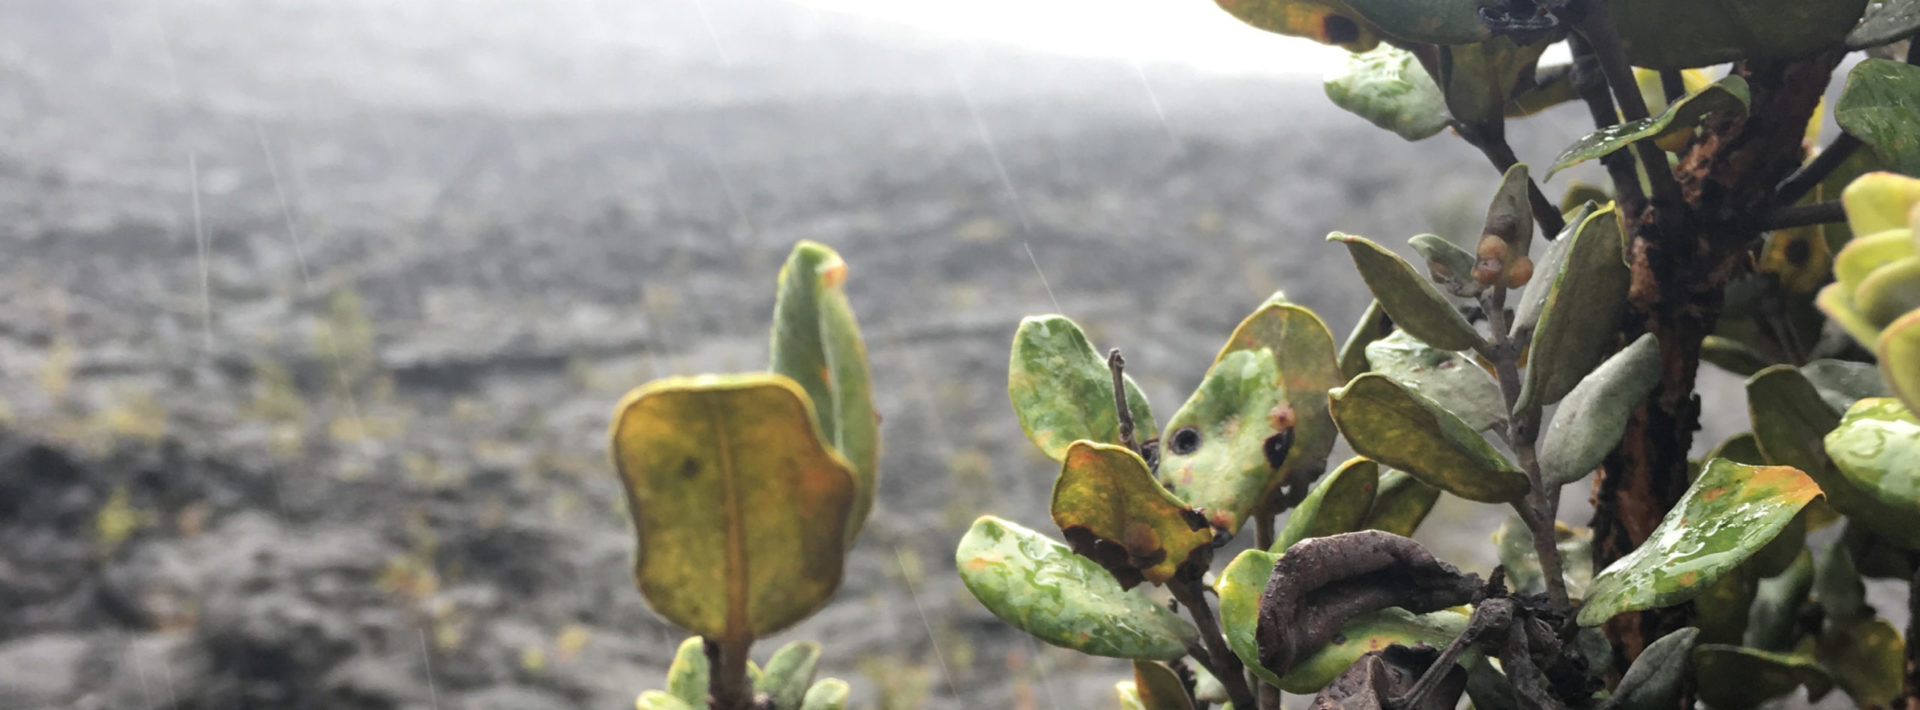 TREX 2018 Day 3: Biodiversity in the Kilauea Iki Crater